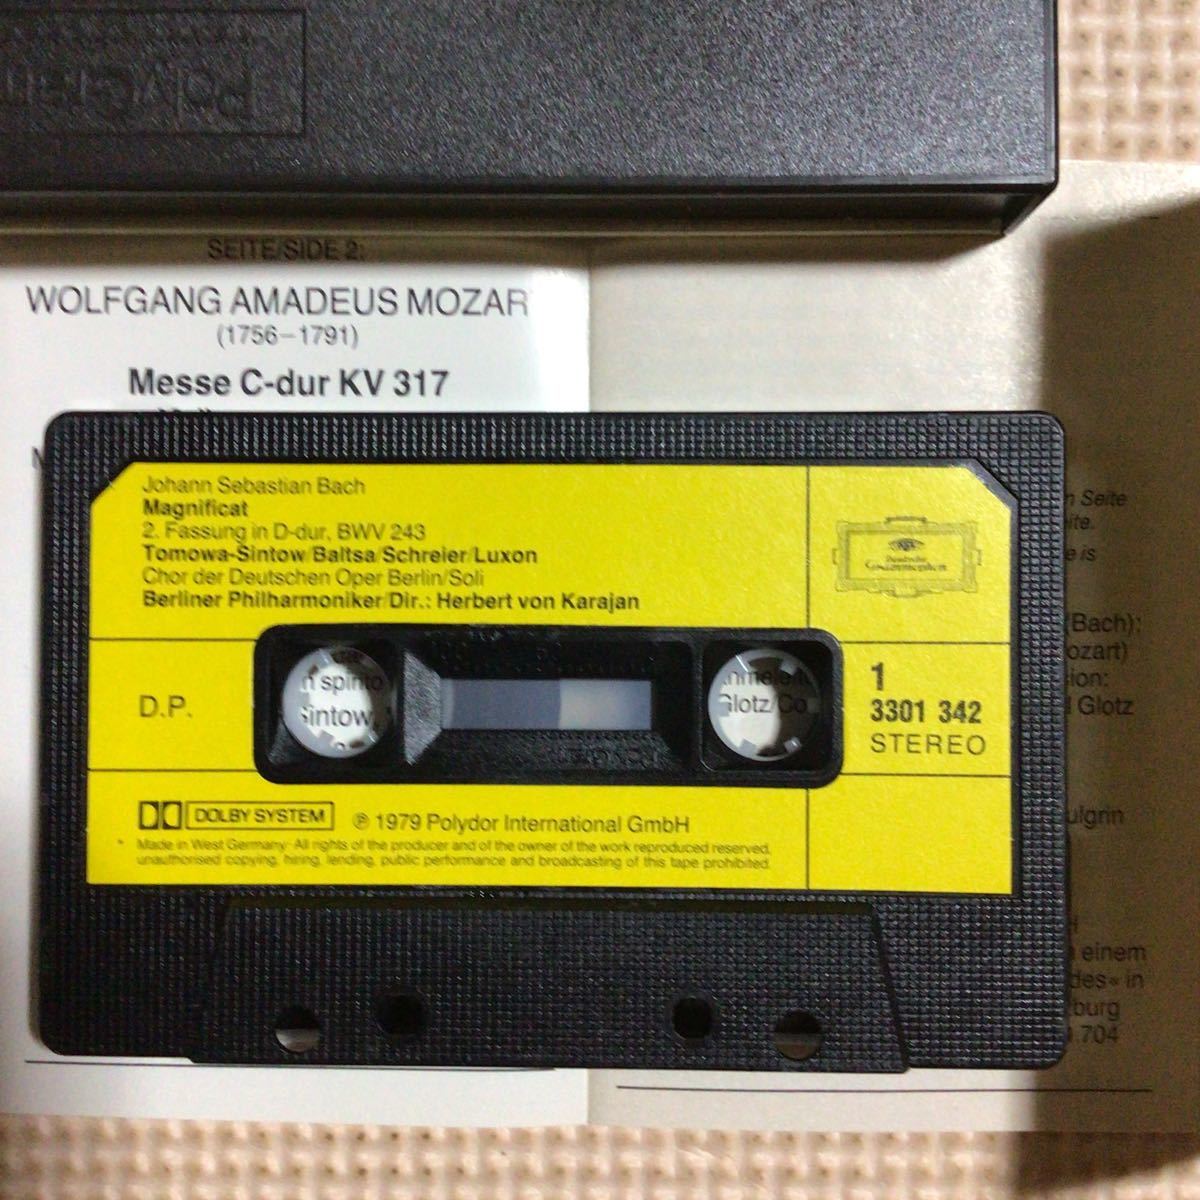 J.S.ba is manifikatomo-tsaruto..misakalayan finger ., Berlin Phil is - moni - west Germany record cassette tape 